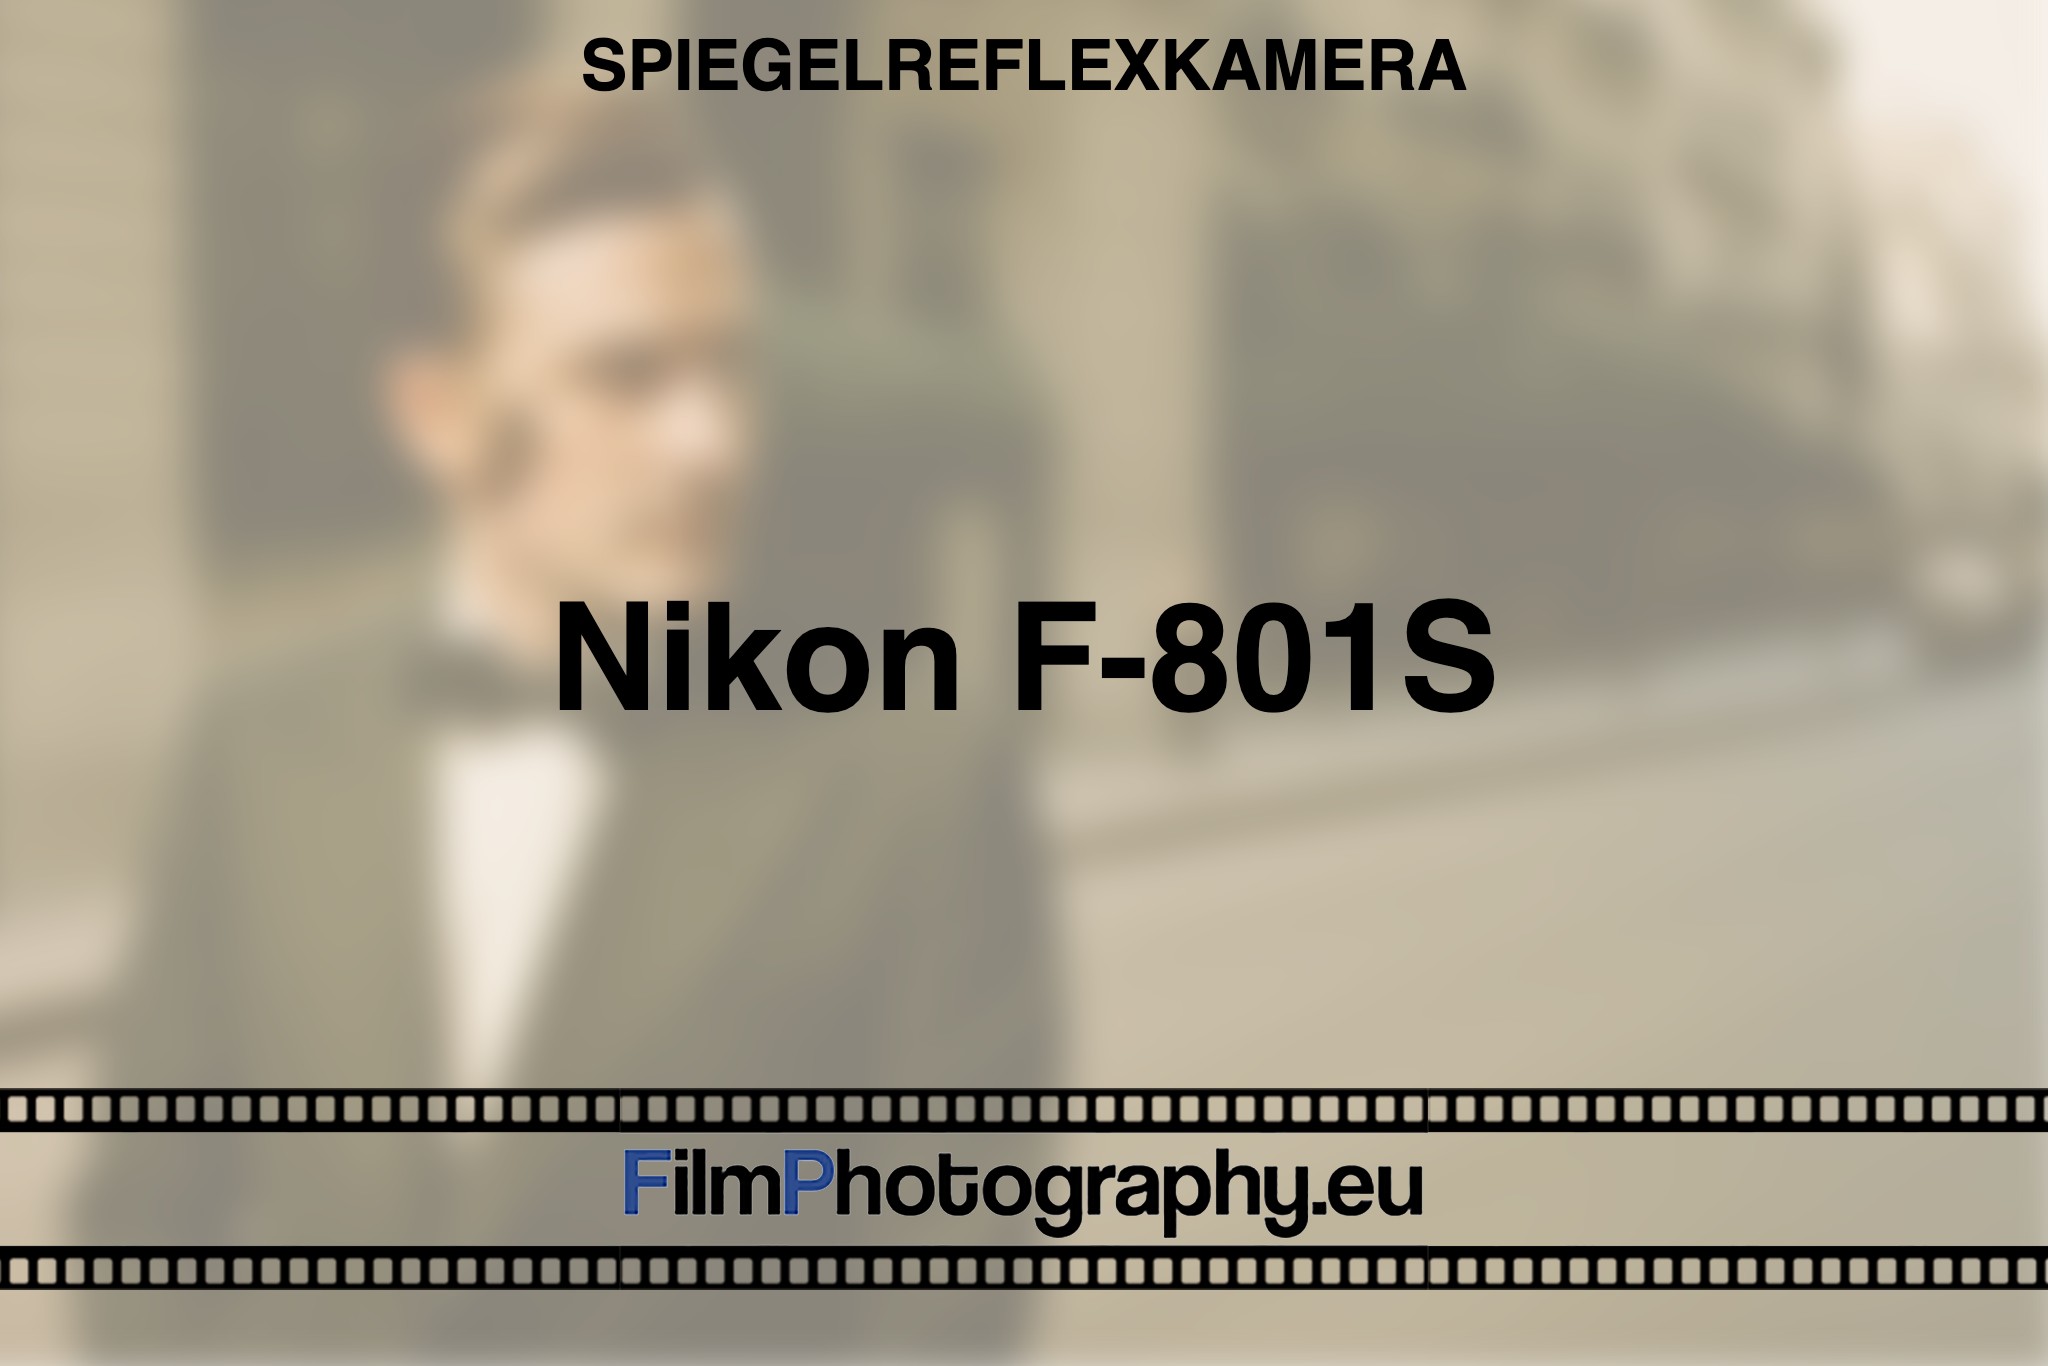 nikon-f-801s-spiegelreflexkamera-bnv